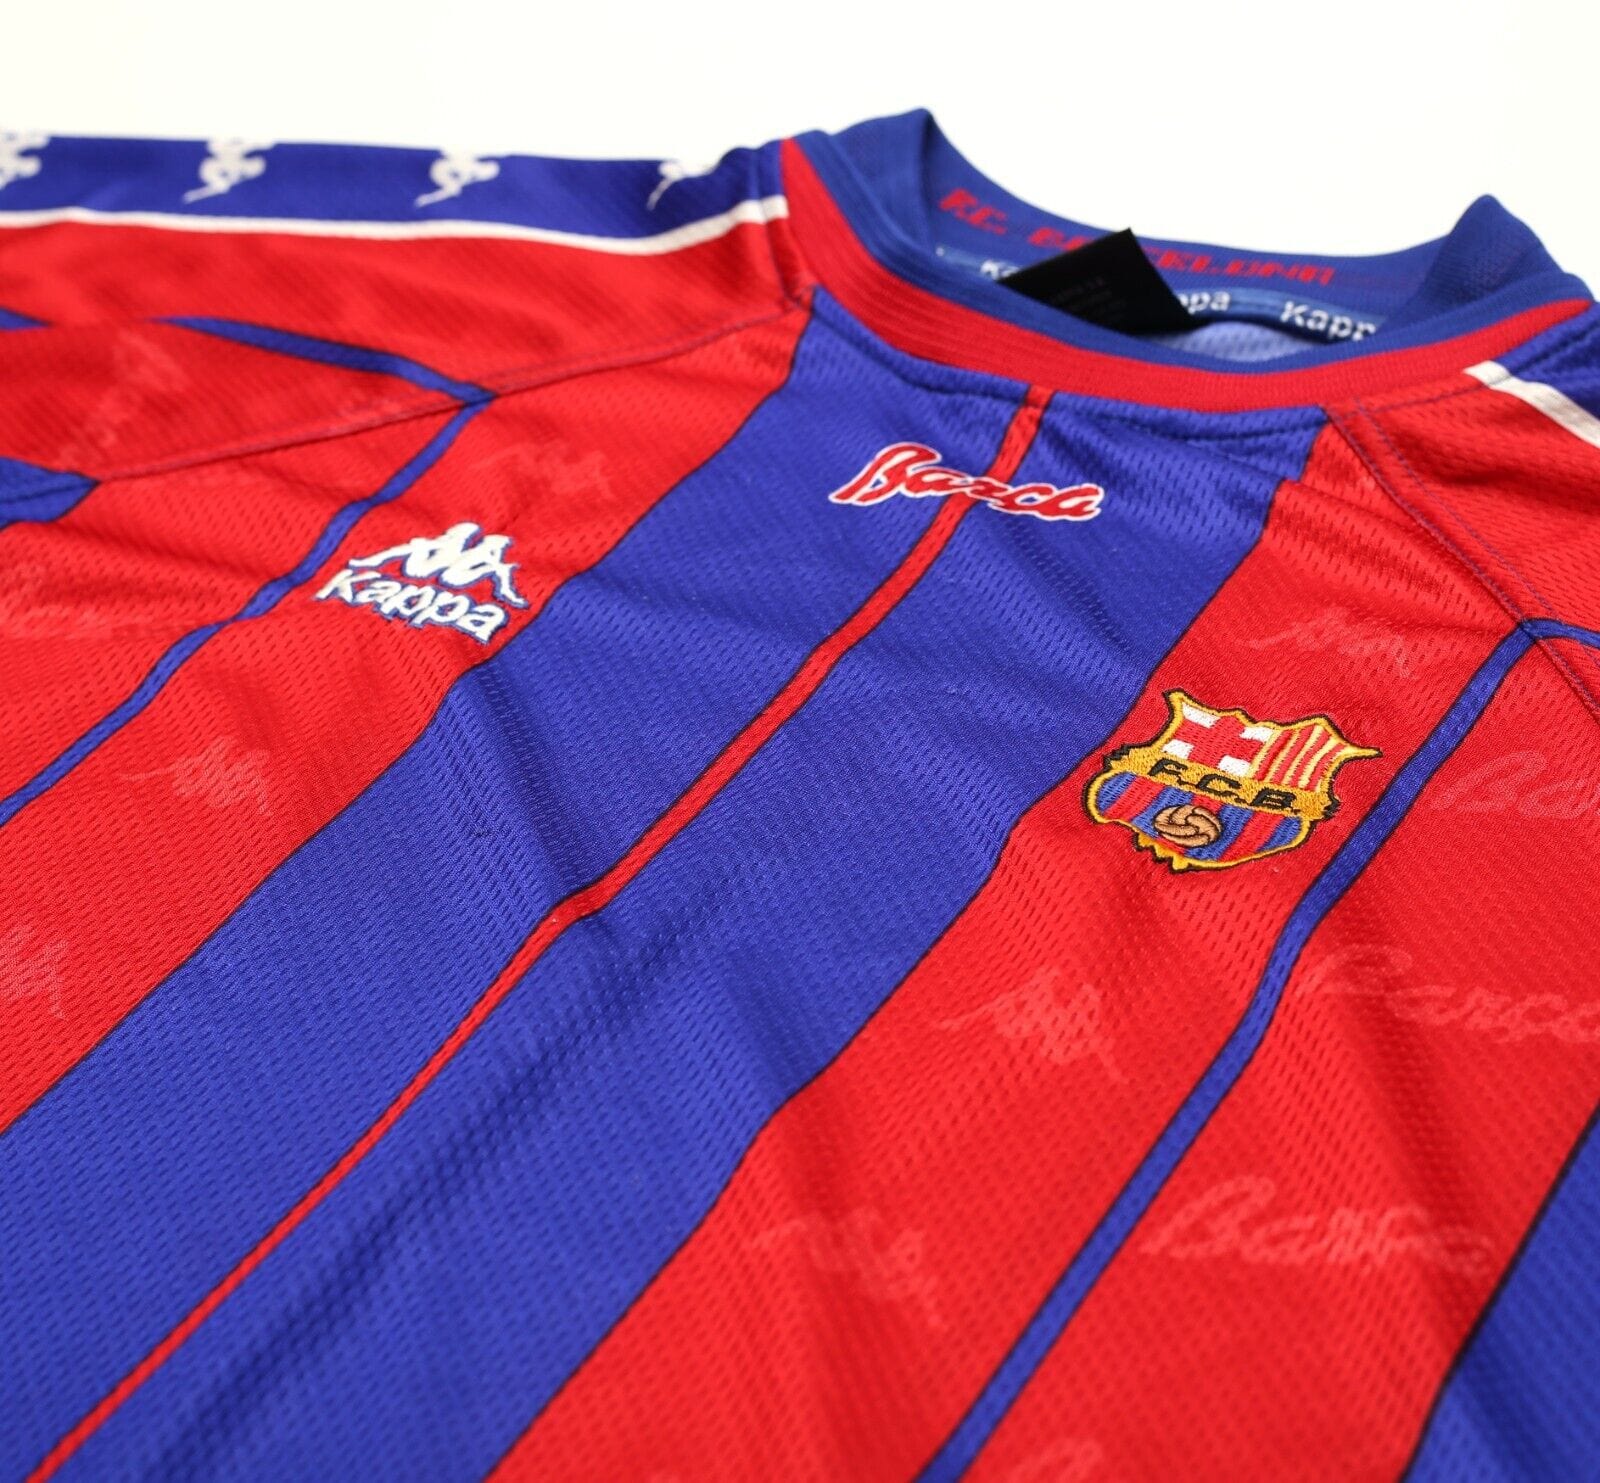 1997/98 BARCELONA Vintage Kappa Home Football Shirt Jersey (S/M)